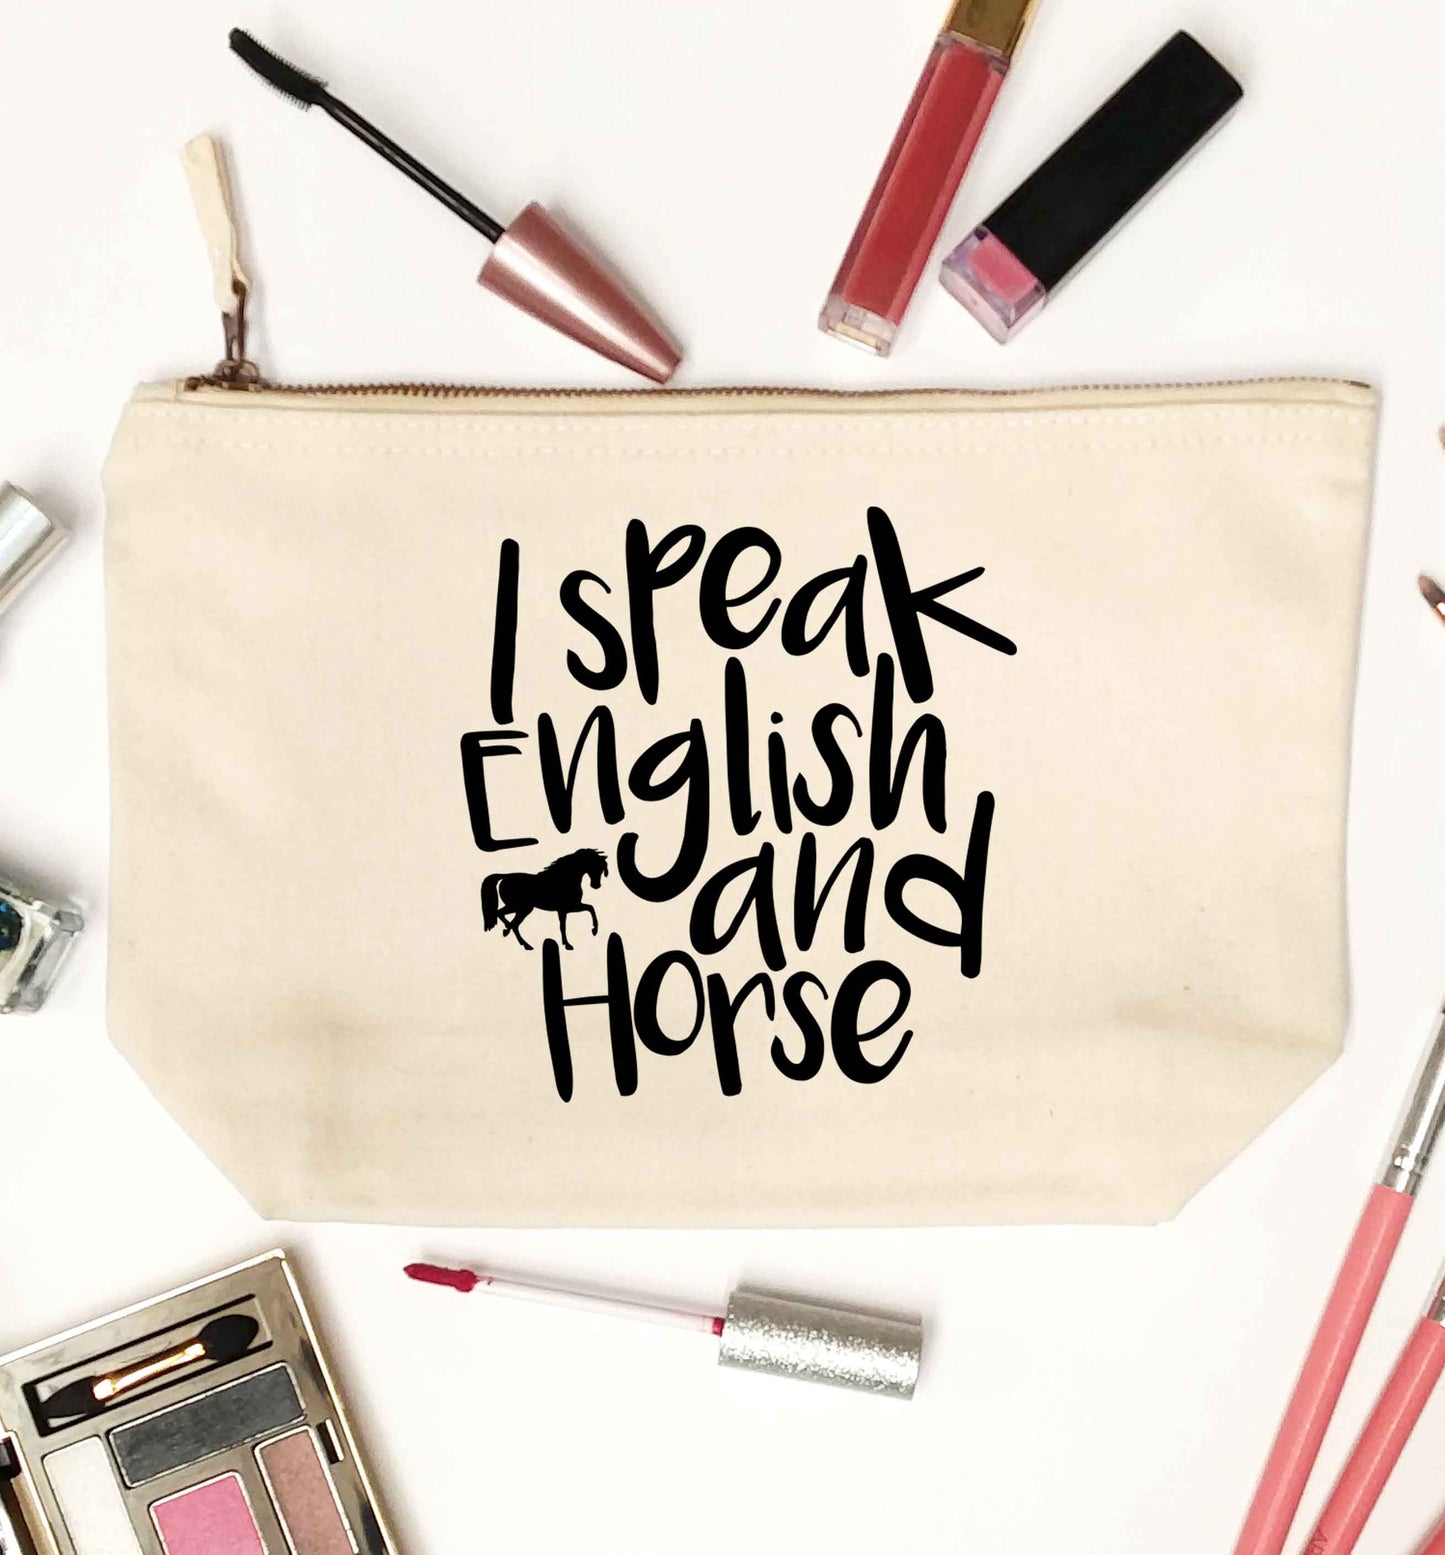 I speak English and horse natural makeup bag